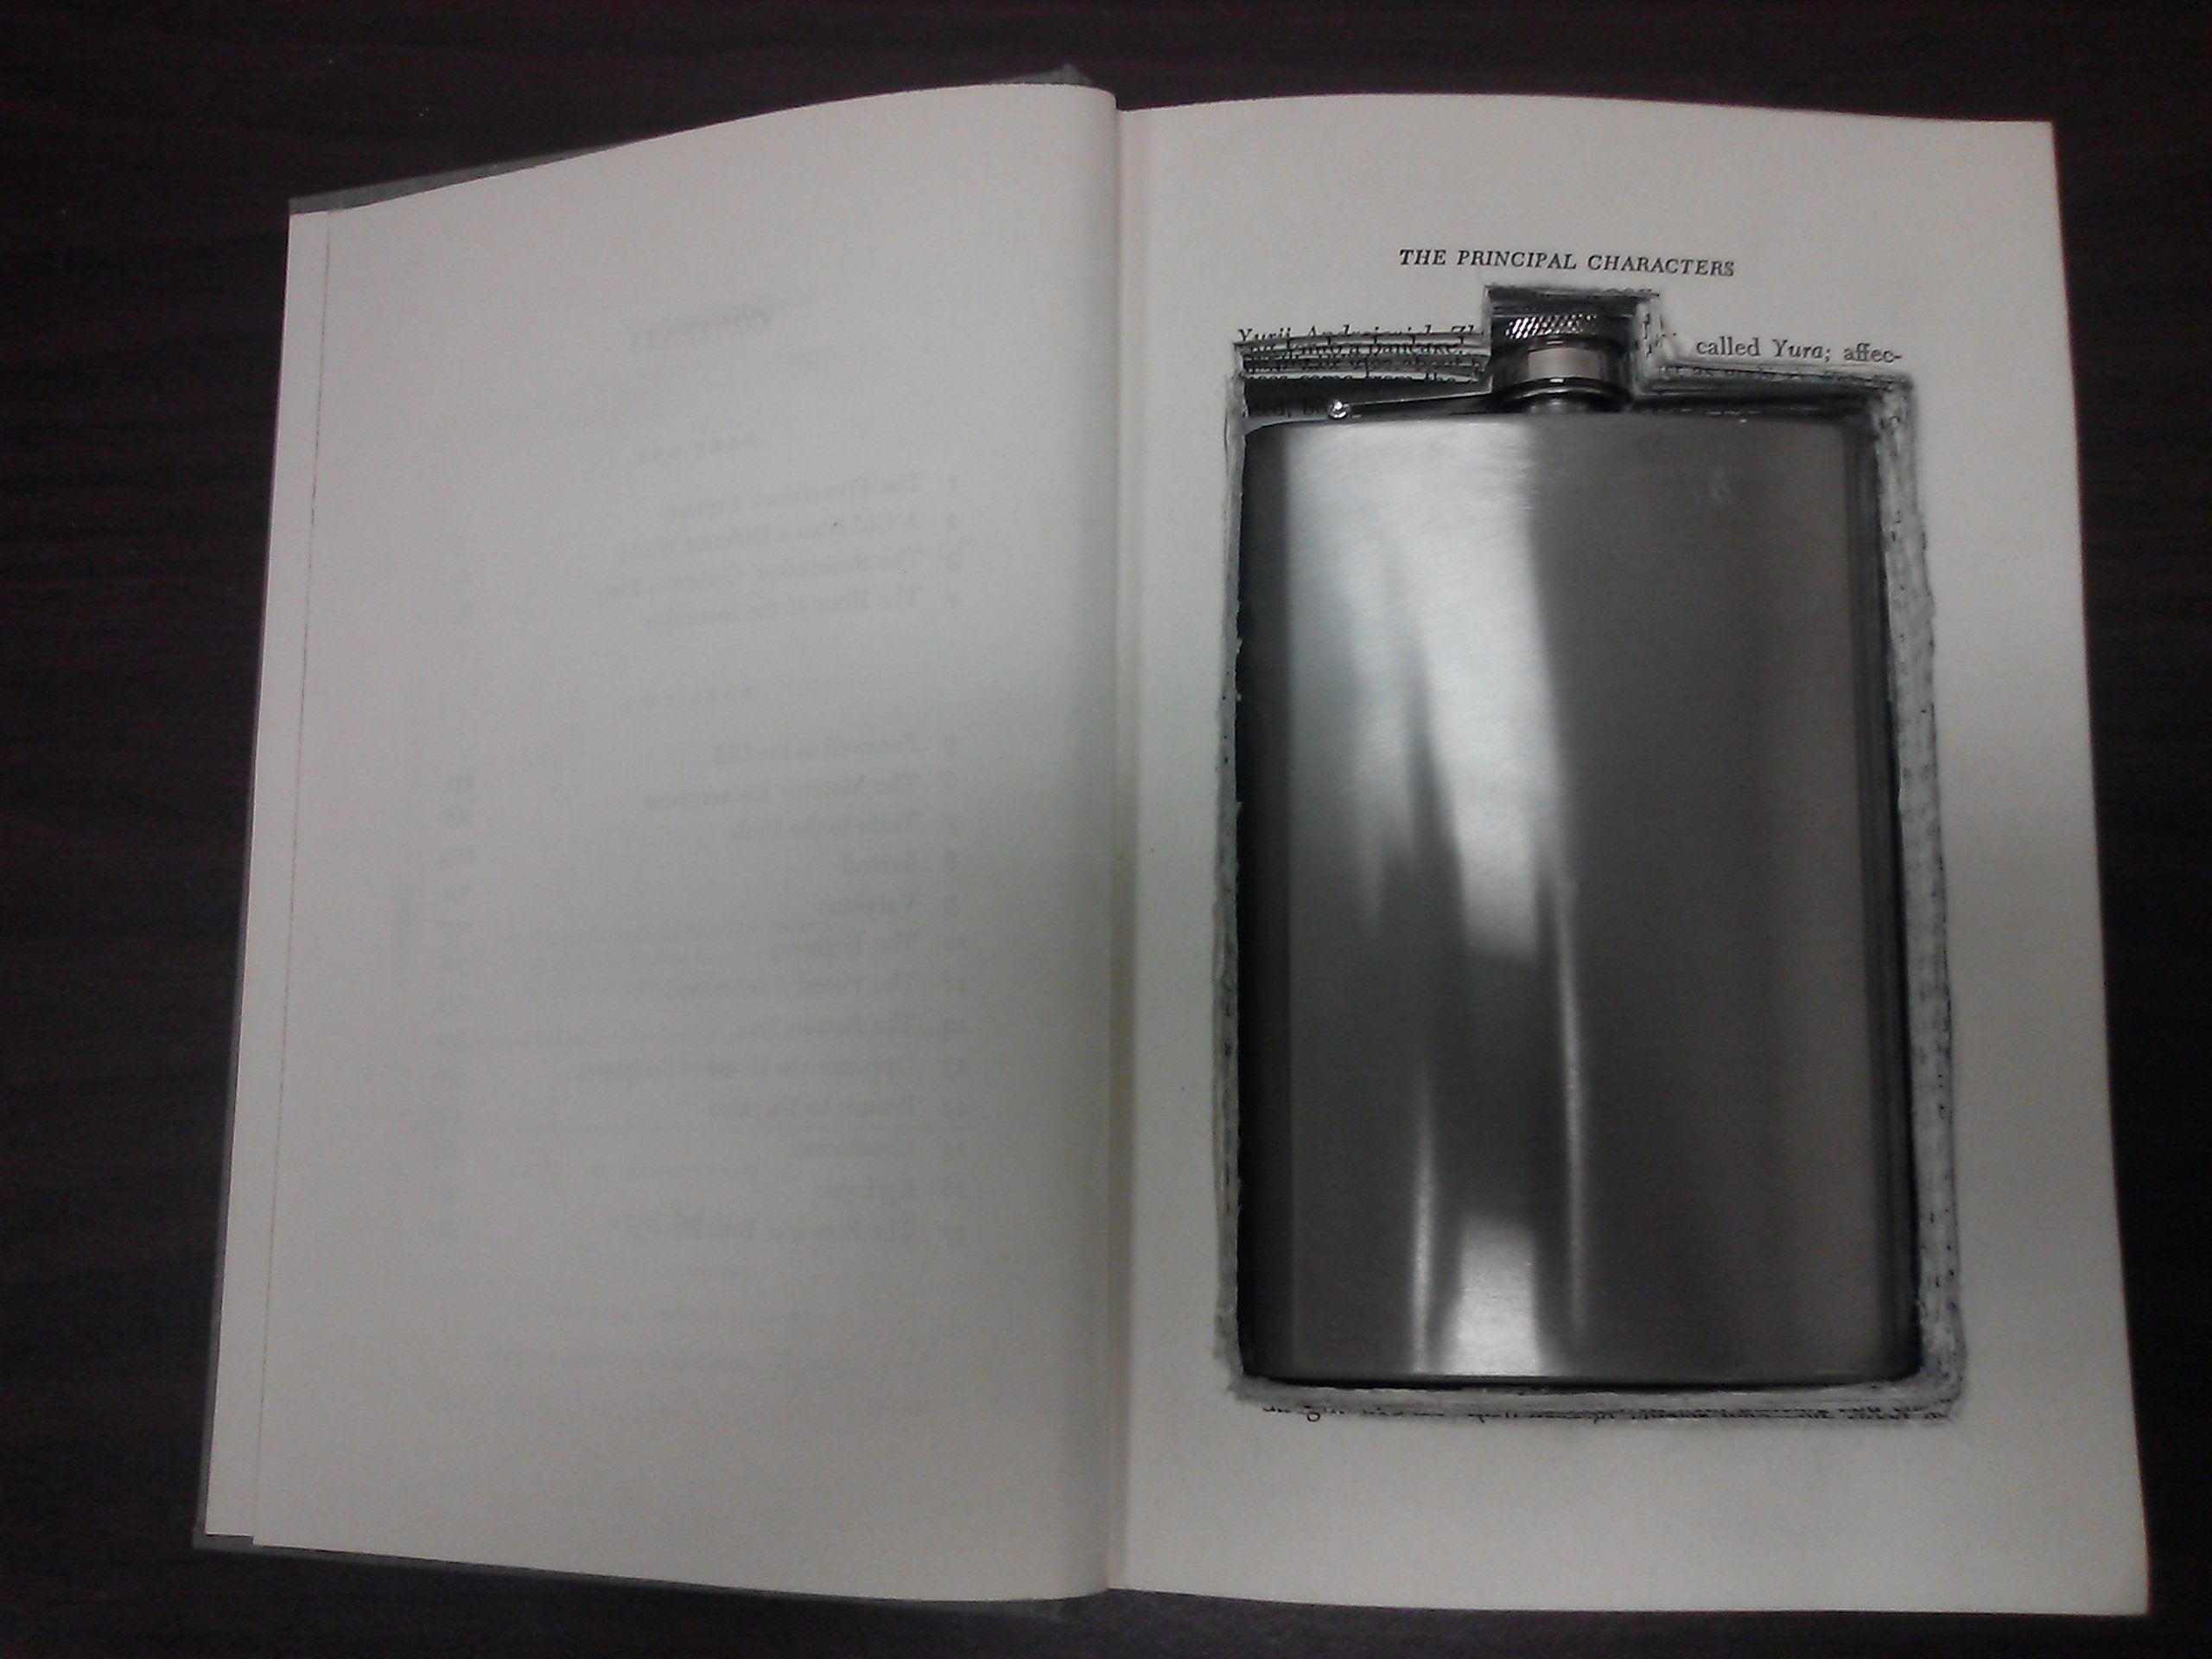 Flask Hidden in a Book